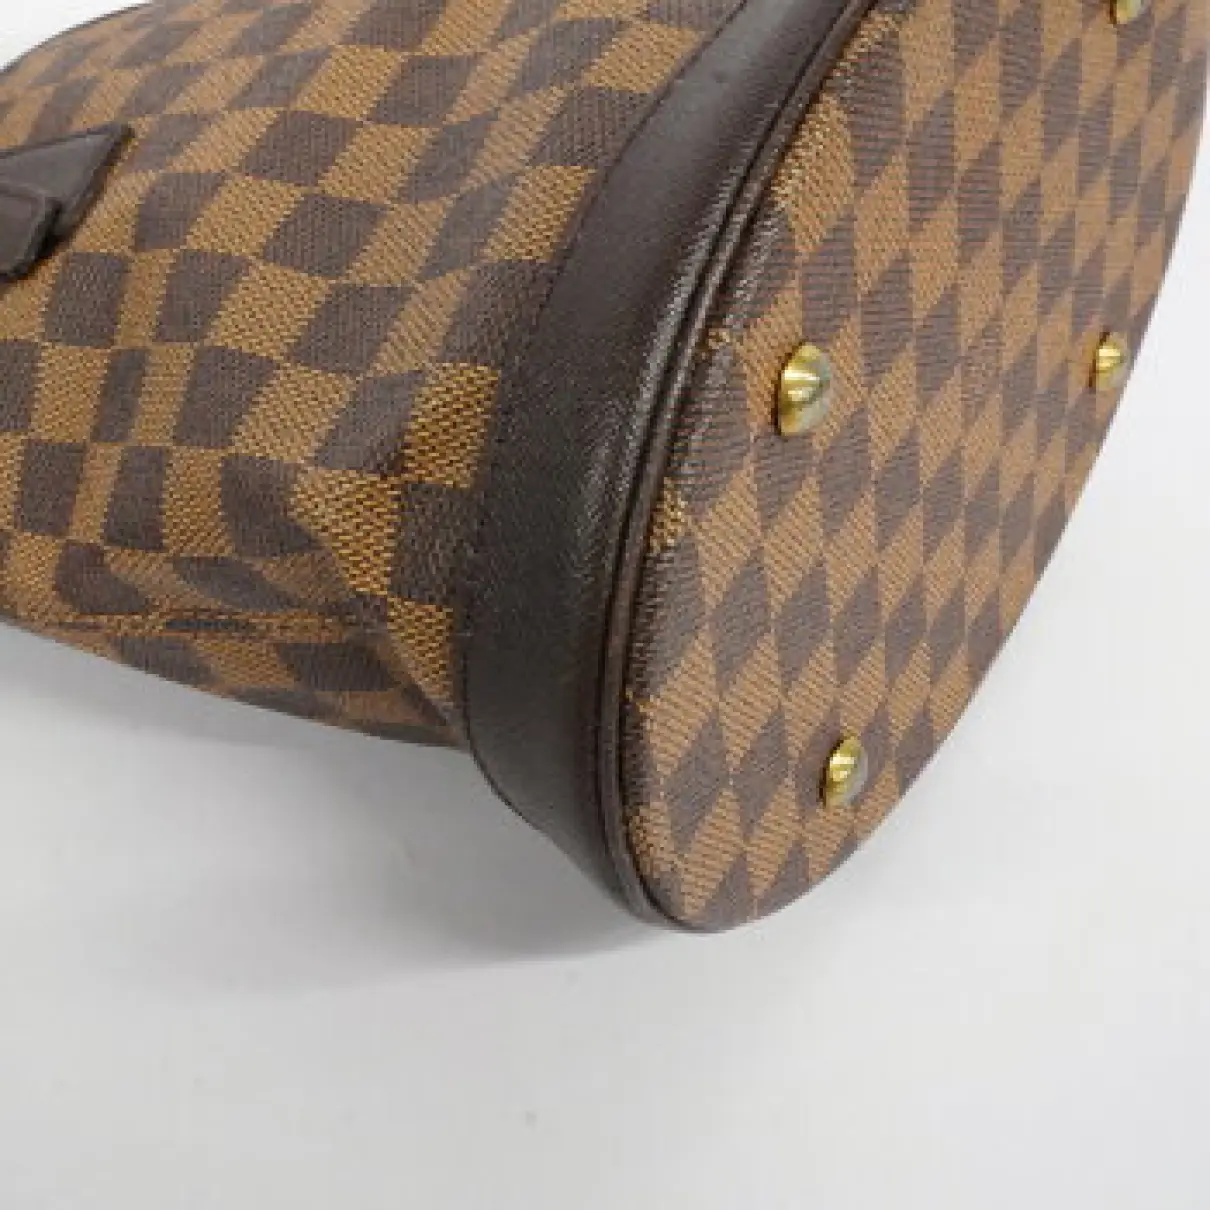 Marais leather handbag Louis Vuitton